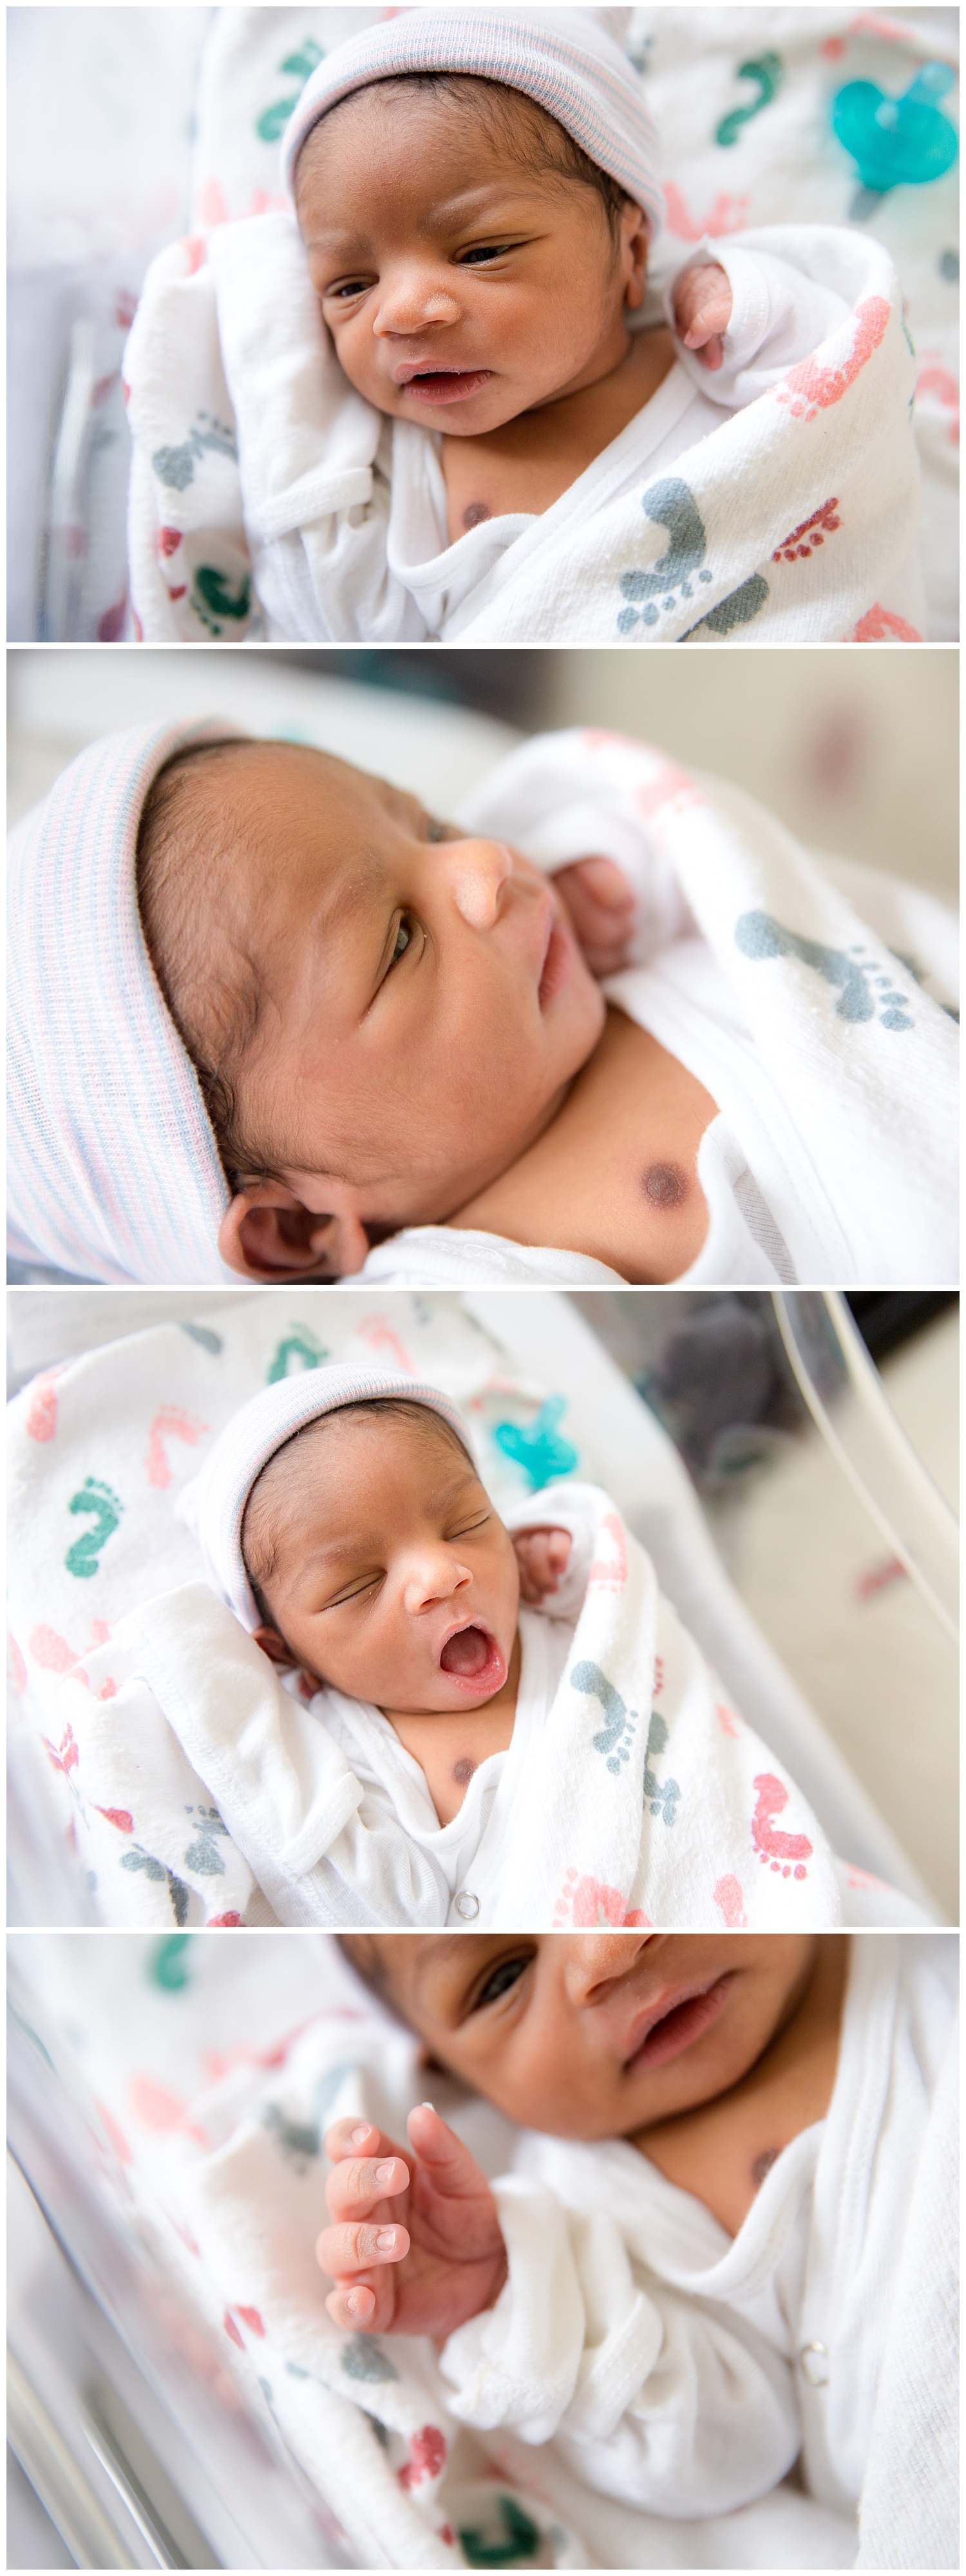 baby boy yawning at cooper university hospital in camden new jersey newborn photographer